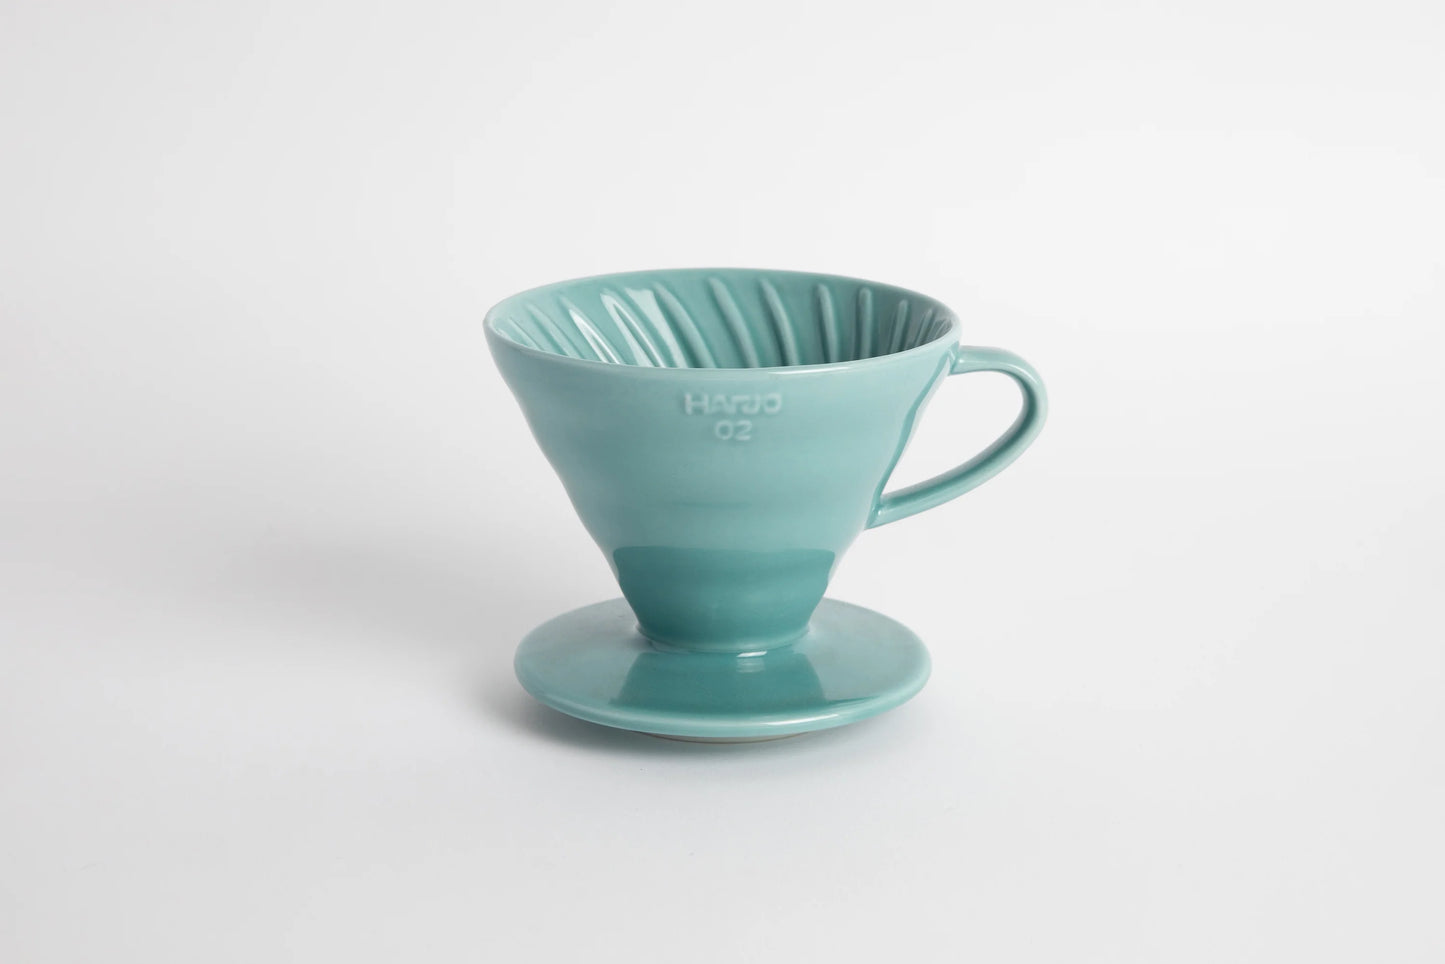 Hario V60-02 Ceramic Coffee Dripper - Turquoise